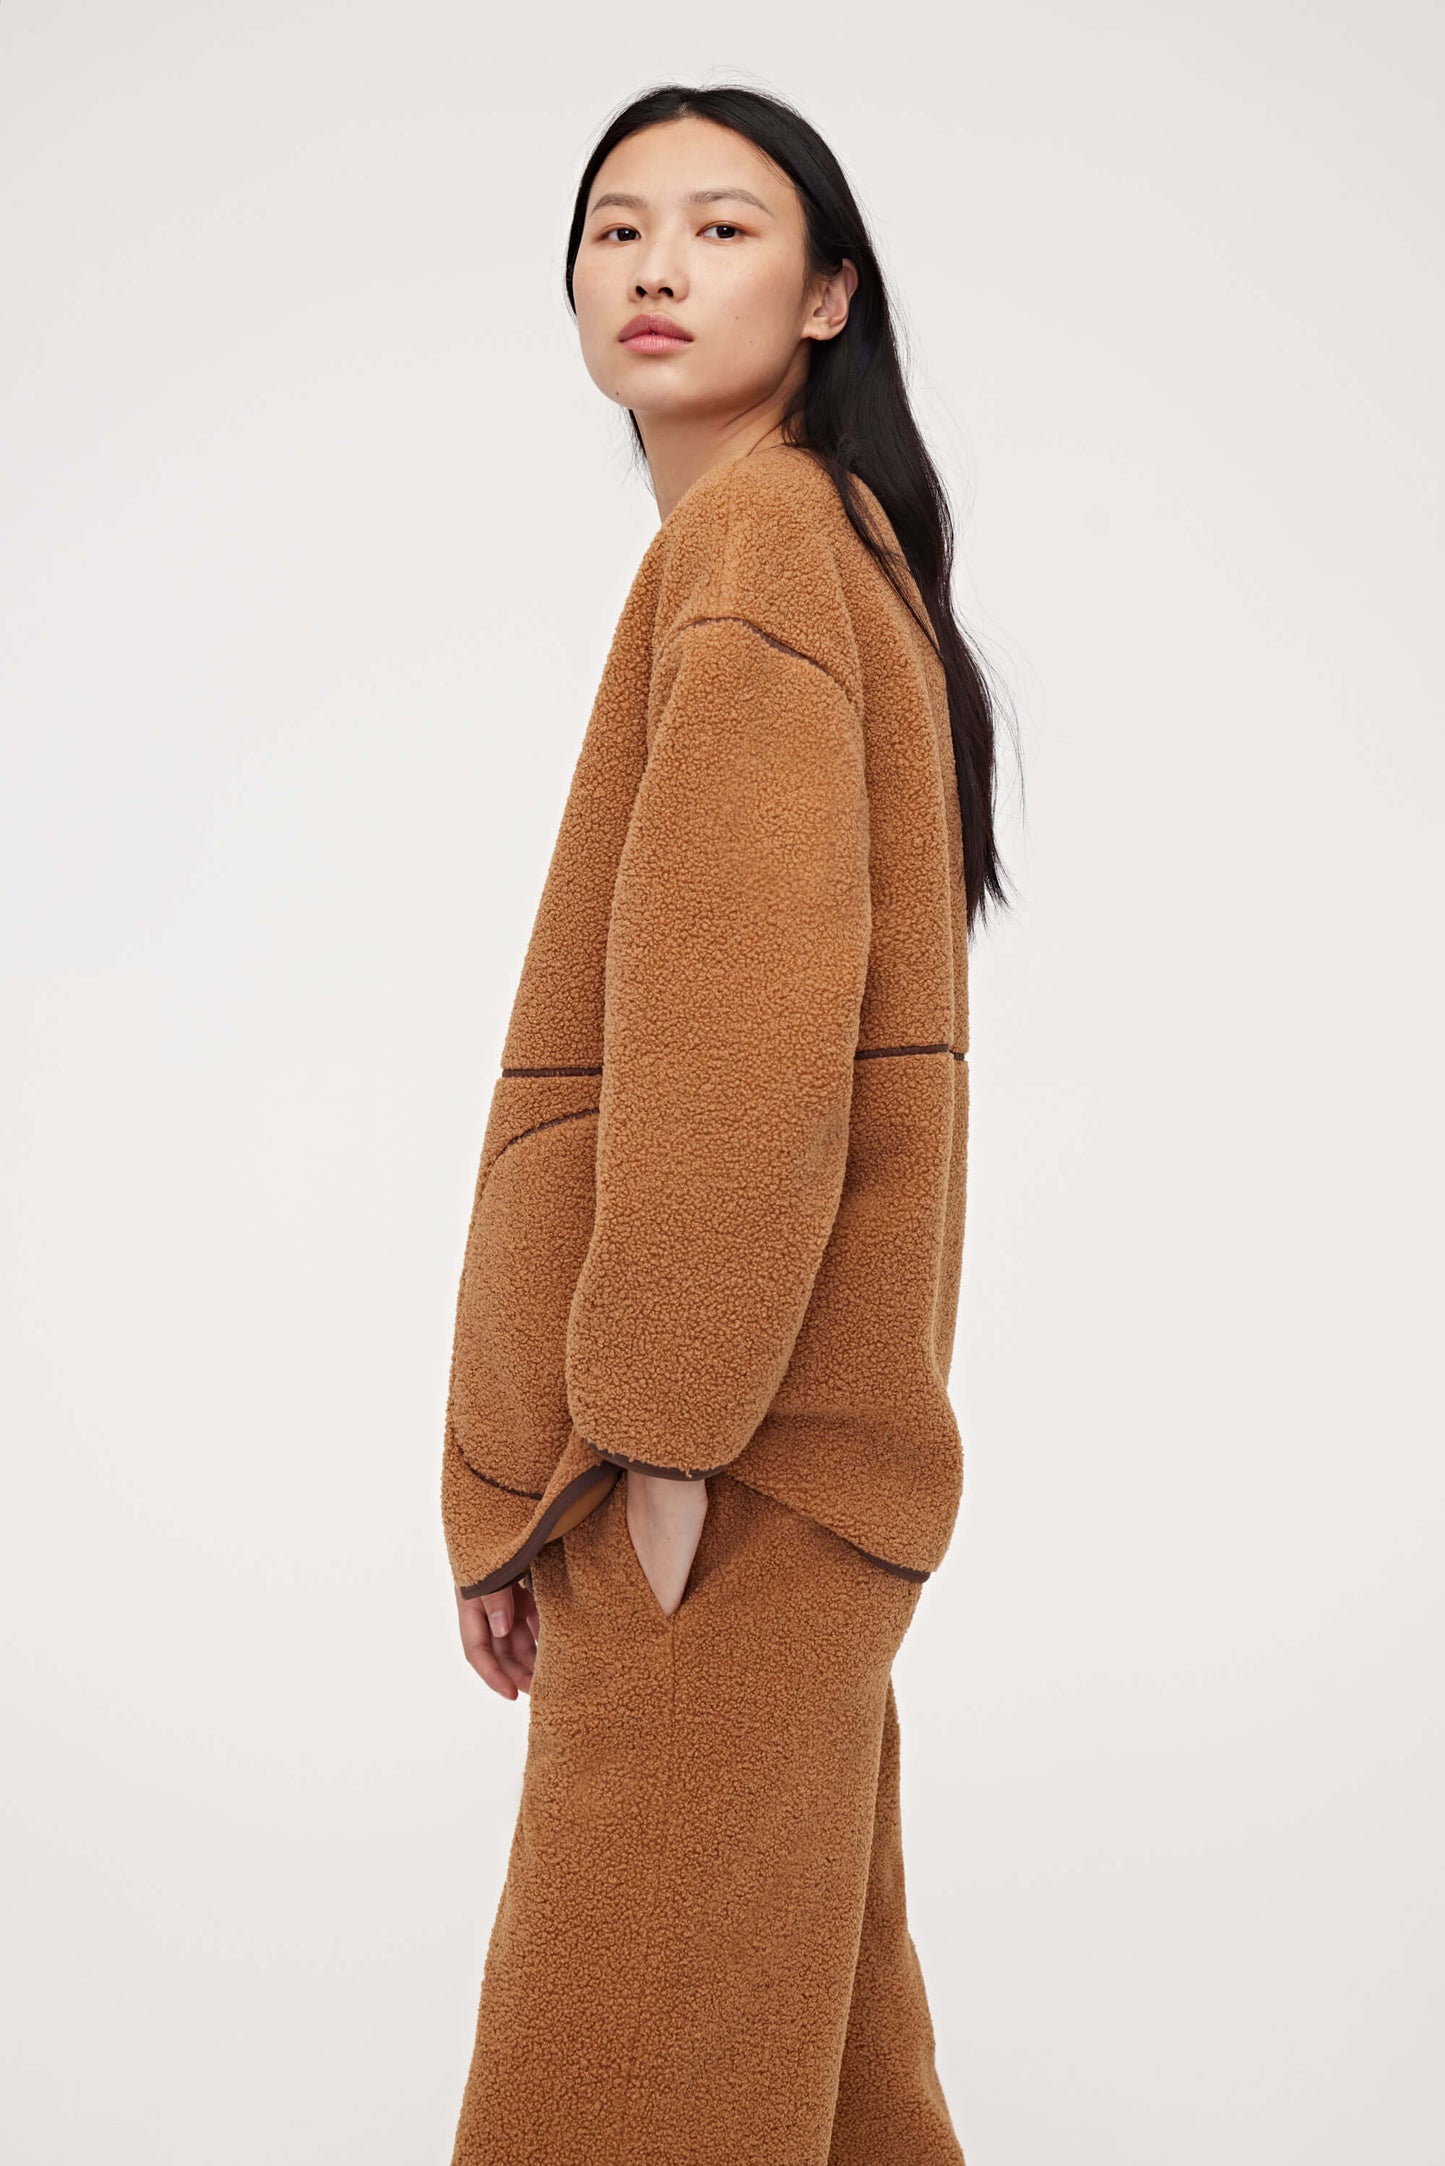 Woman wearing brown teddy fleece jacket and facing left